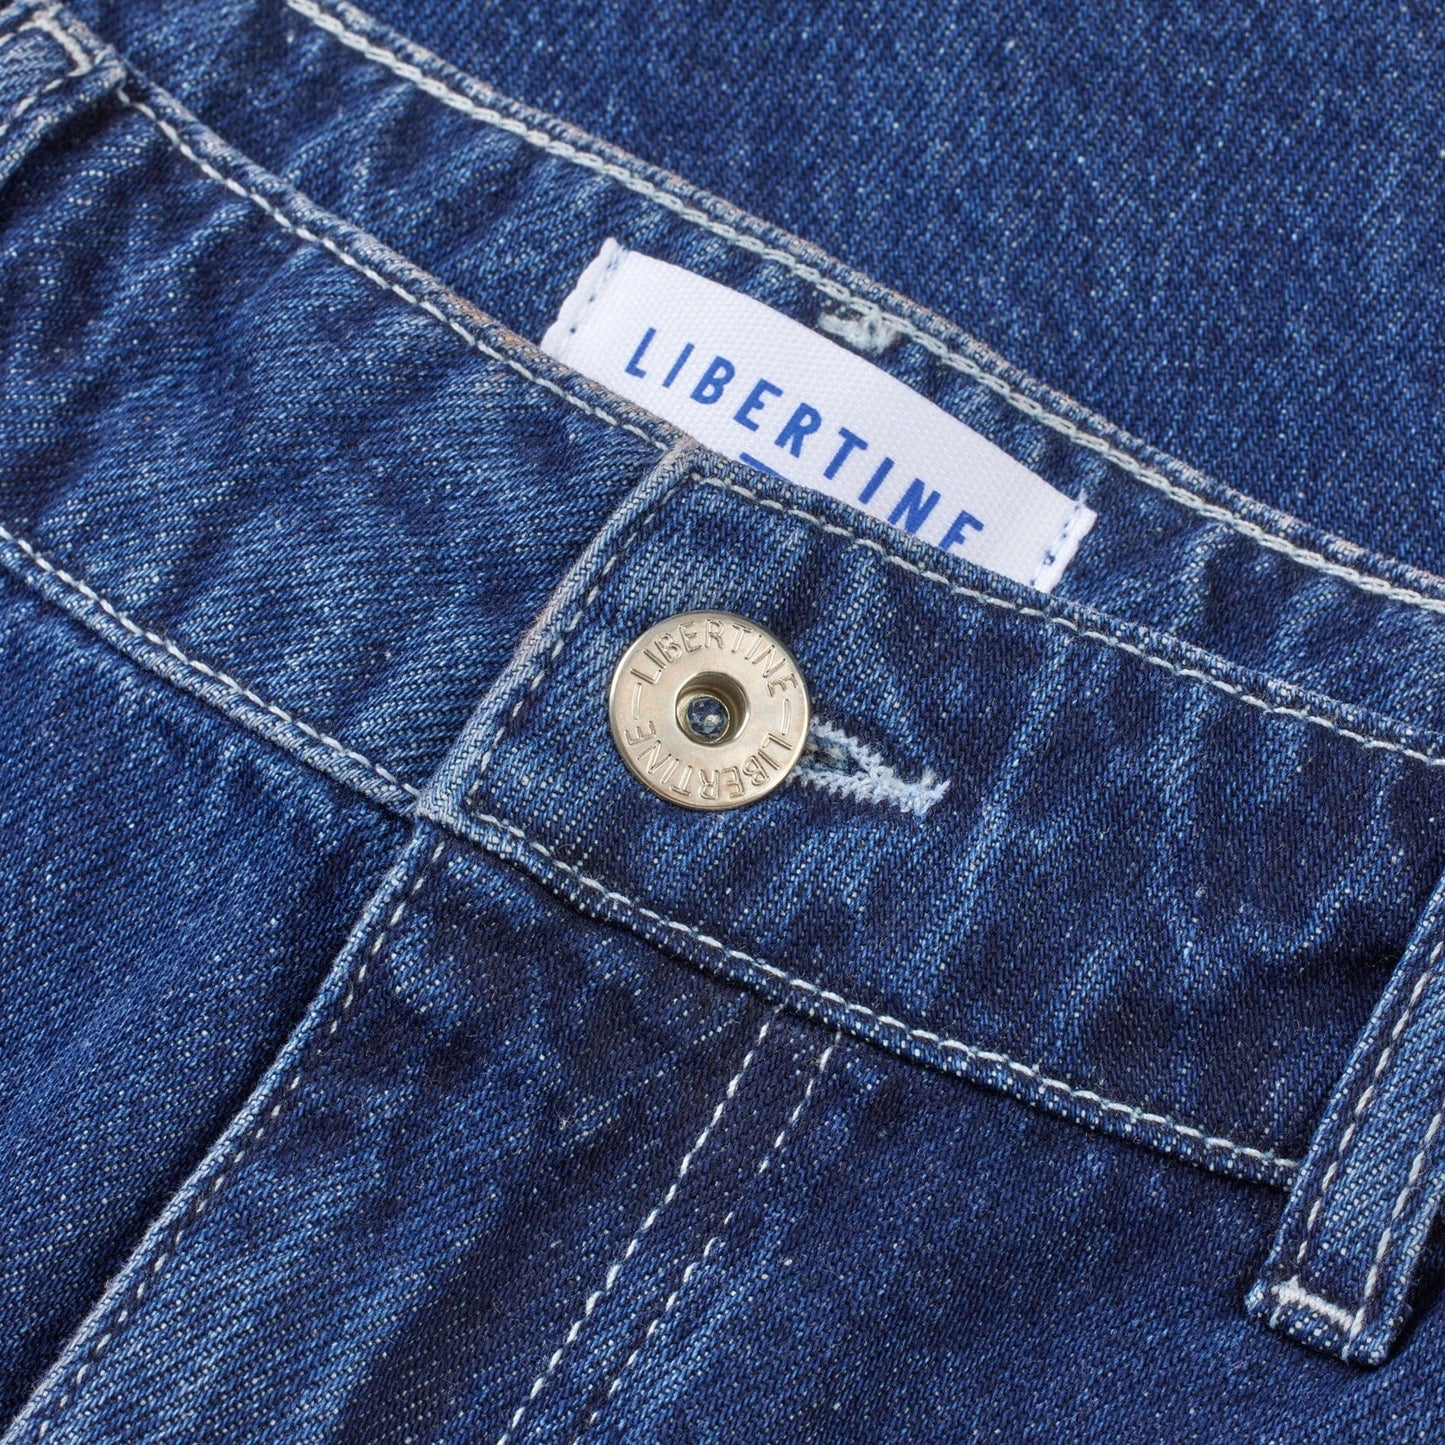 Libertine-Libertine Decade Pants - Blue Pants Libertine-Libertine 